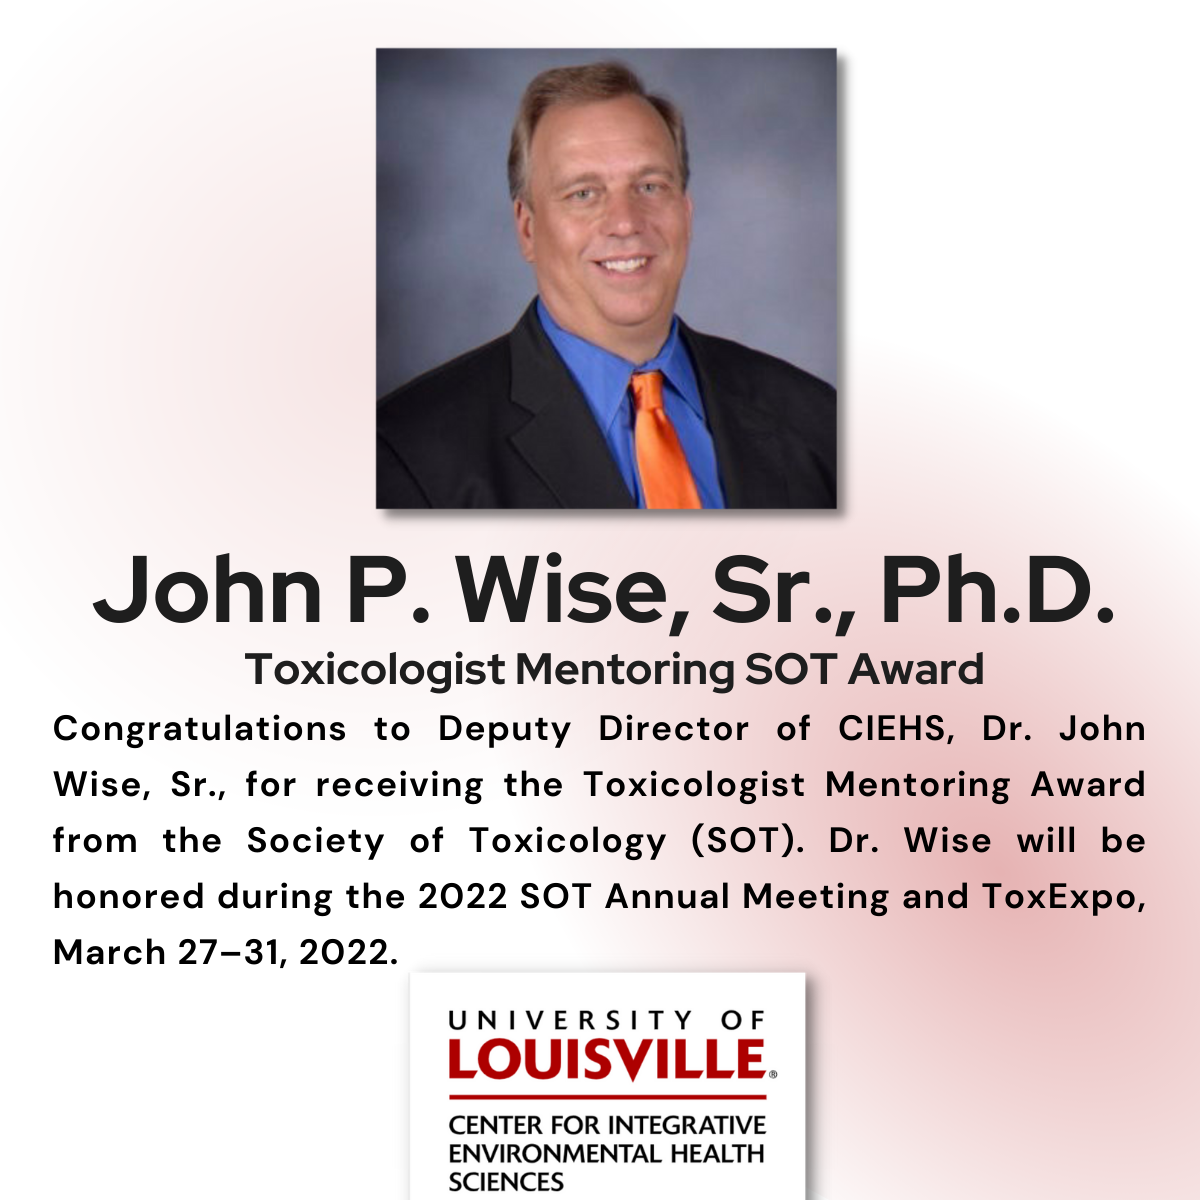 John P. Wise, Sr., Ph.D. Toxicologist Mentoring SOT Award